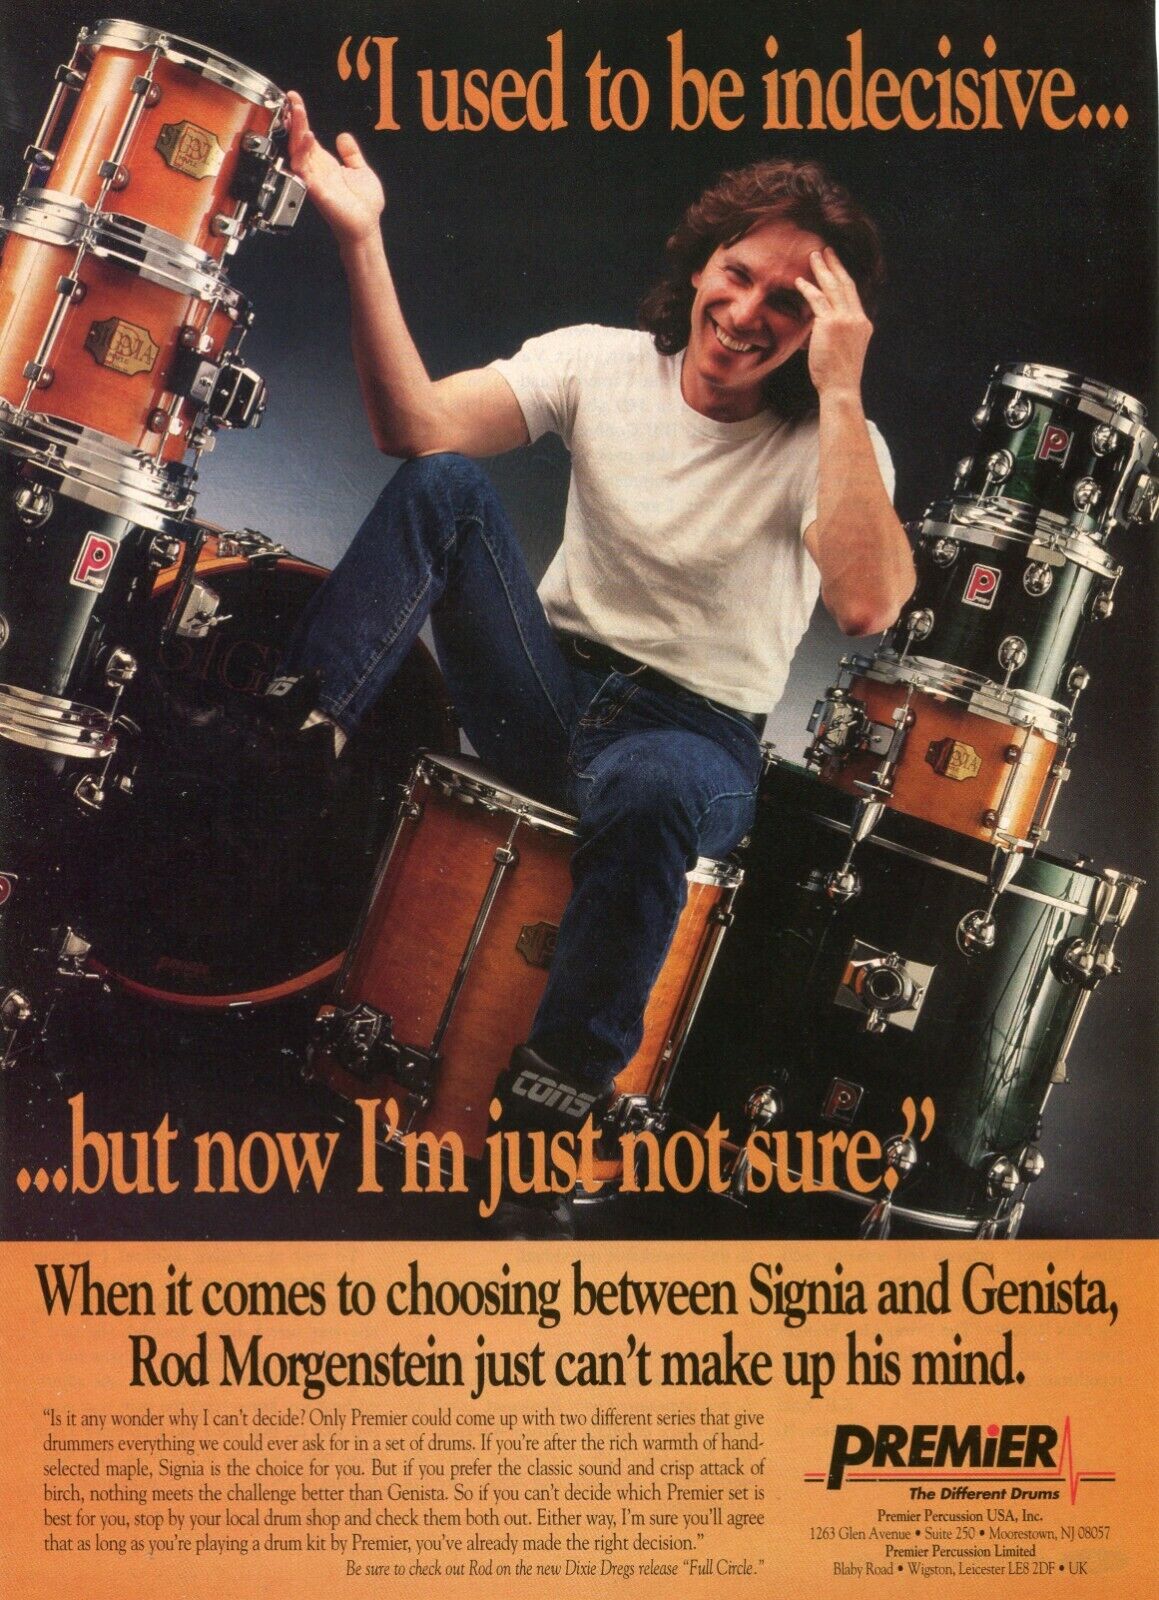 1995 Print Ad of Premier Signia & Genista Drum Kit w Rod Morgenstein 